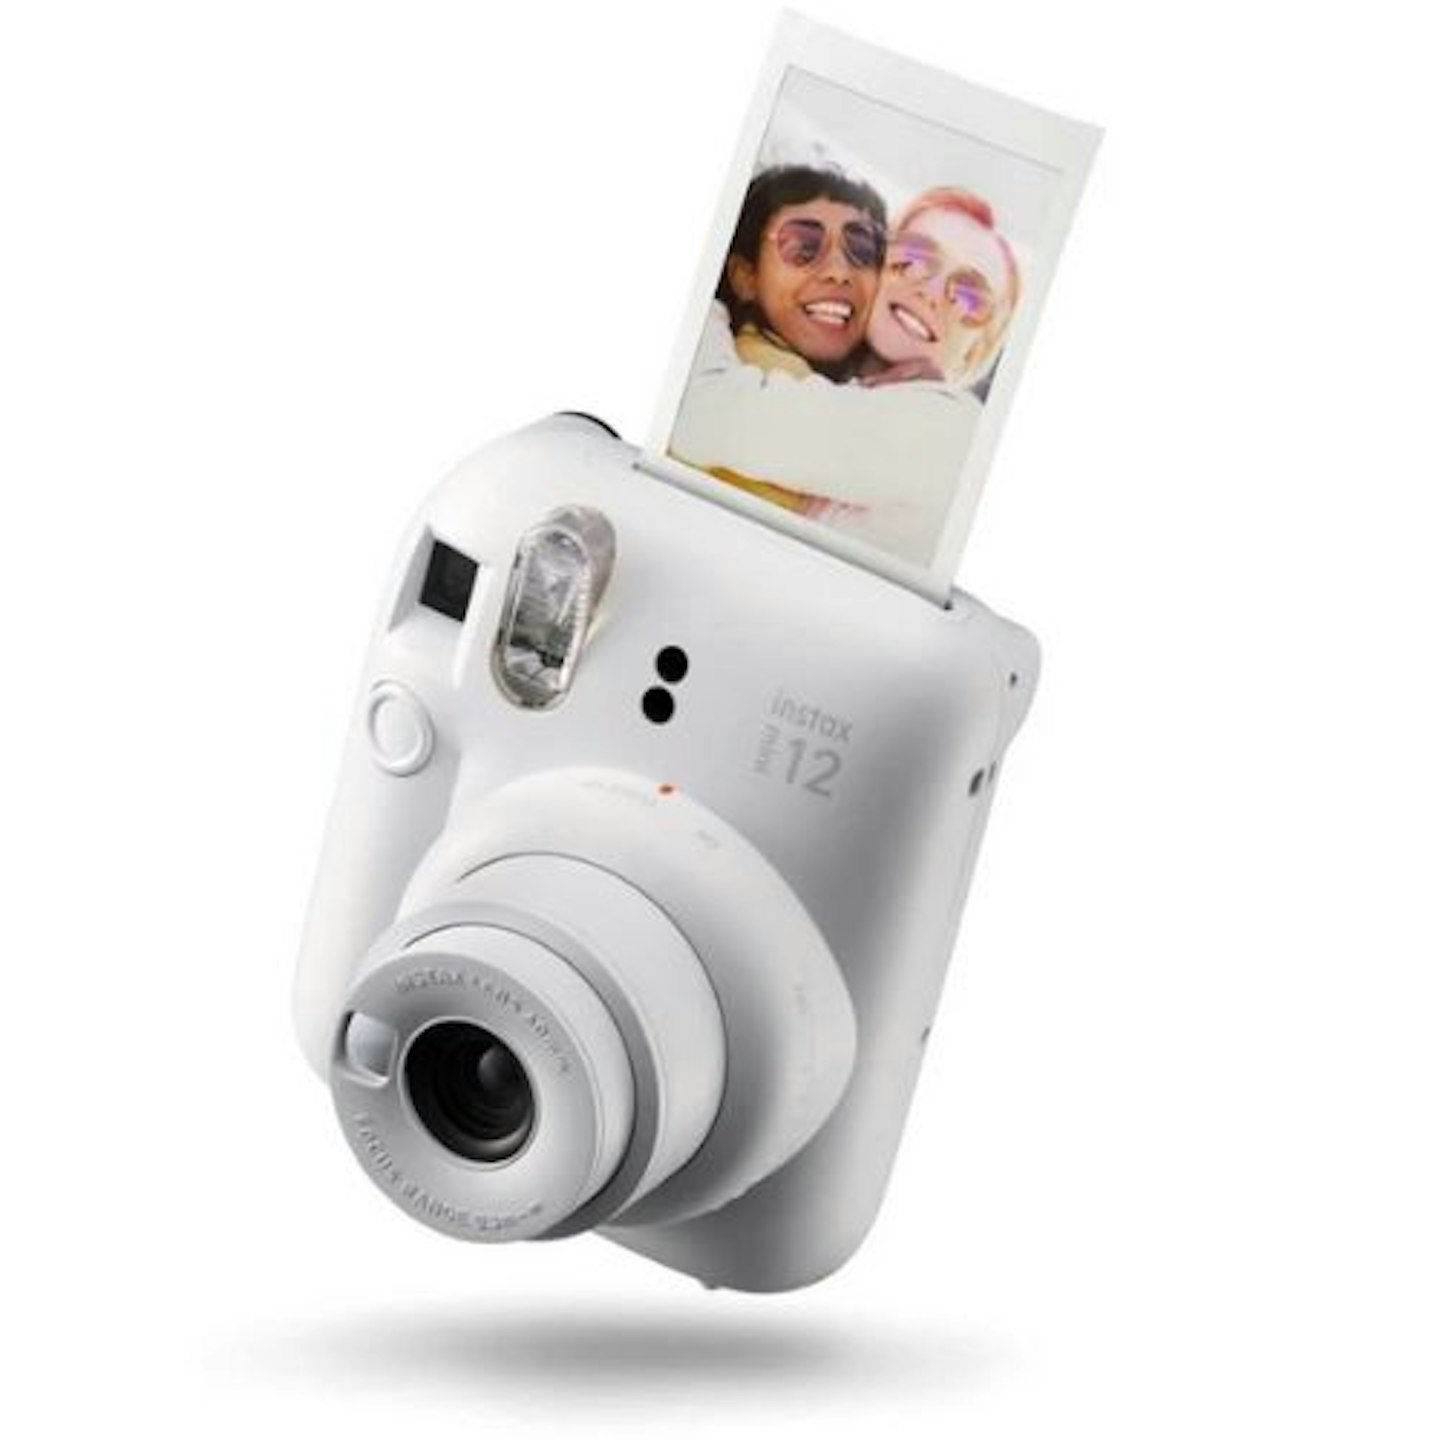 Fujifilm Instax SQUARE SQ6 Instant Camera Instant Film Graphite Gray -  Office Depot